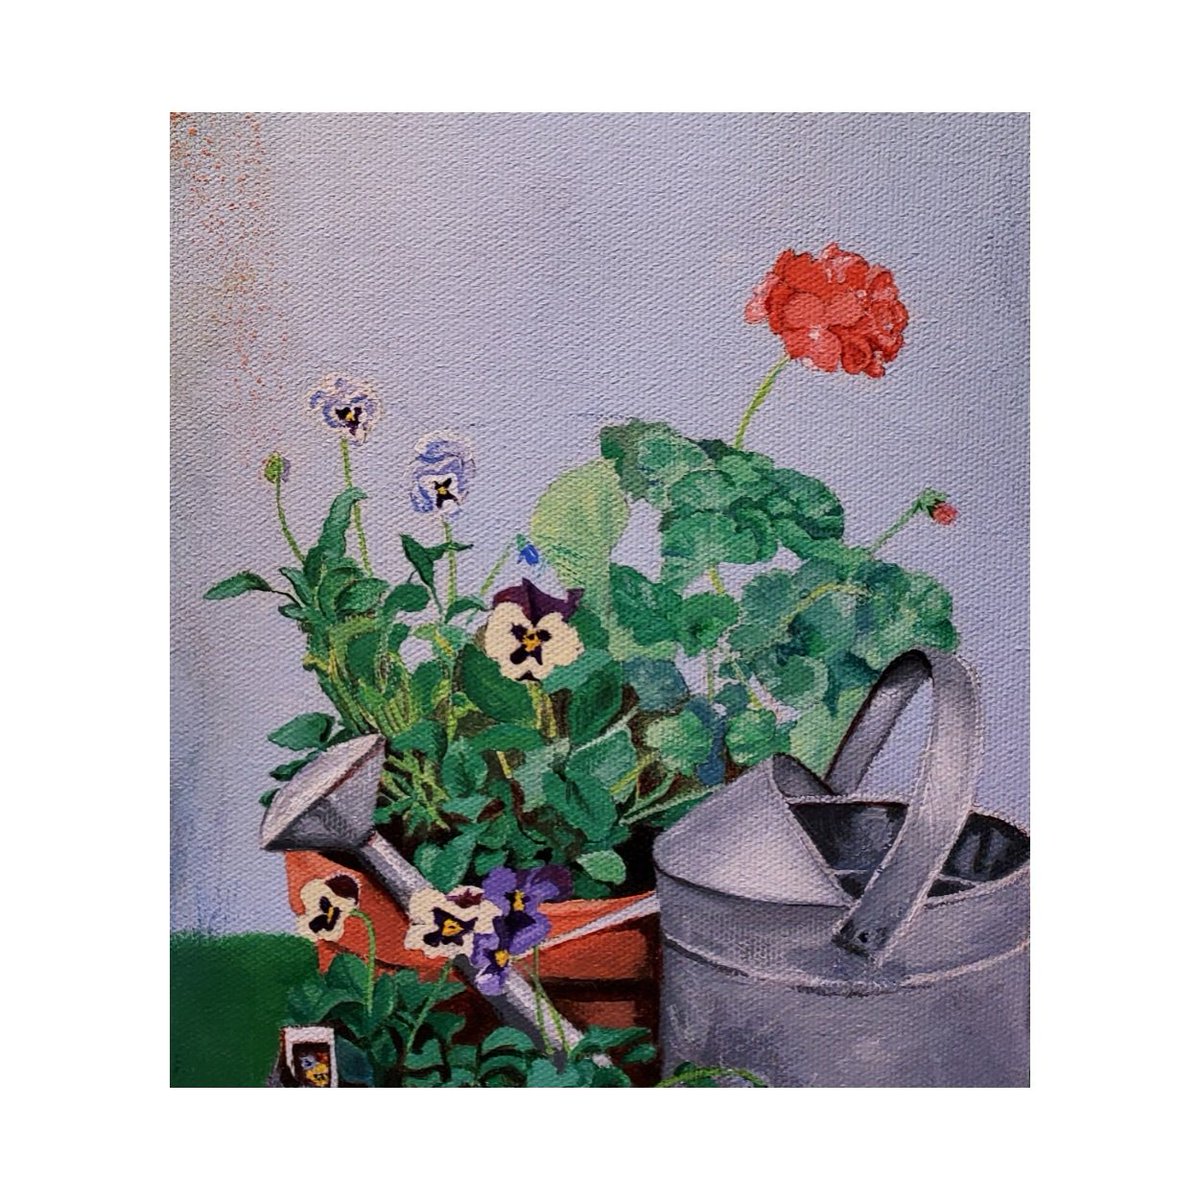 #HappyFriday! 
'Geranium Memory' - 20' x 16' 
25% OFF this weekend 
etsy.com/shop/ArtByMary…
#geraniums #pansies #wateringcan #MemorialDaySale #25percentoff #floral #floralpainting #gardening #gardenpainting #artbymarychant #art #artwork #etsyshop #originalart #flowers #artonsale